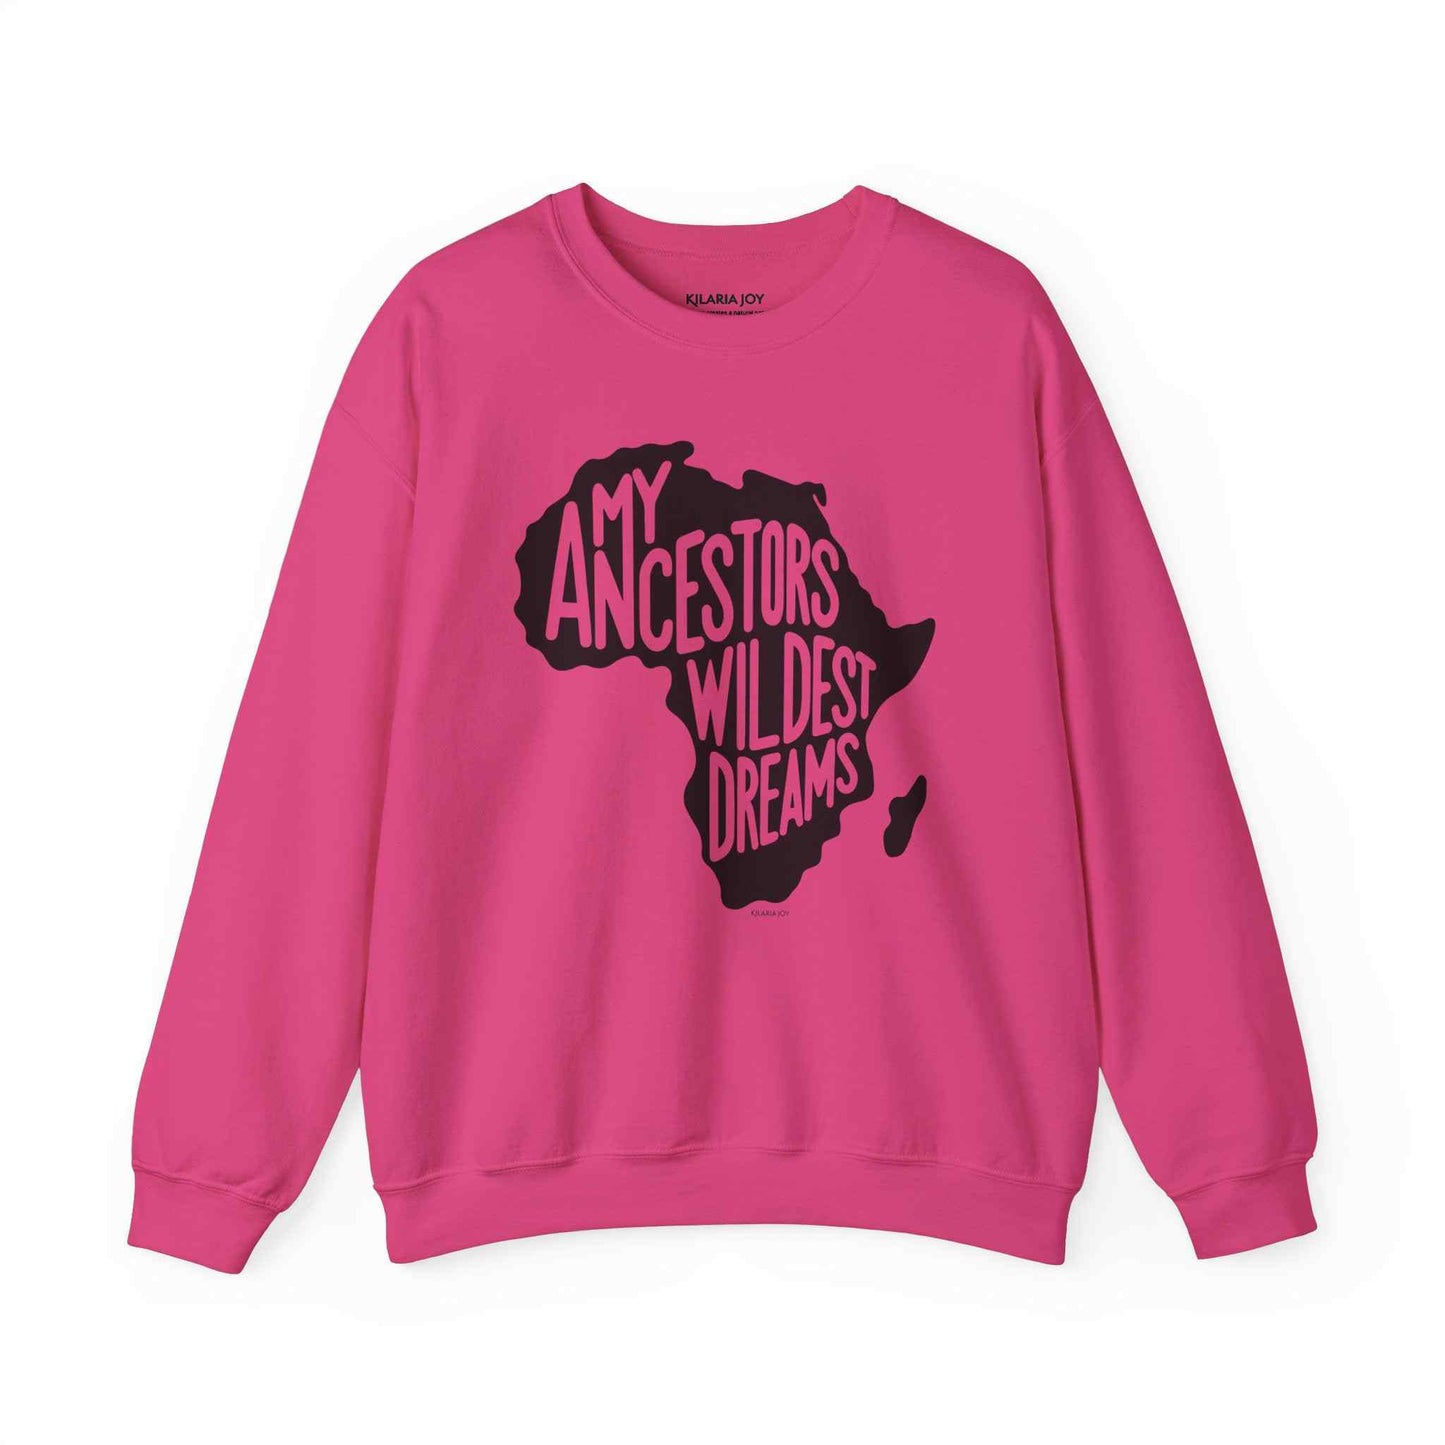 Ancestors' Wildest Dreams Women's Classic Fit Sweatshirt